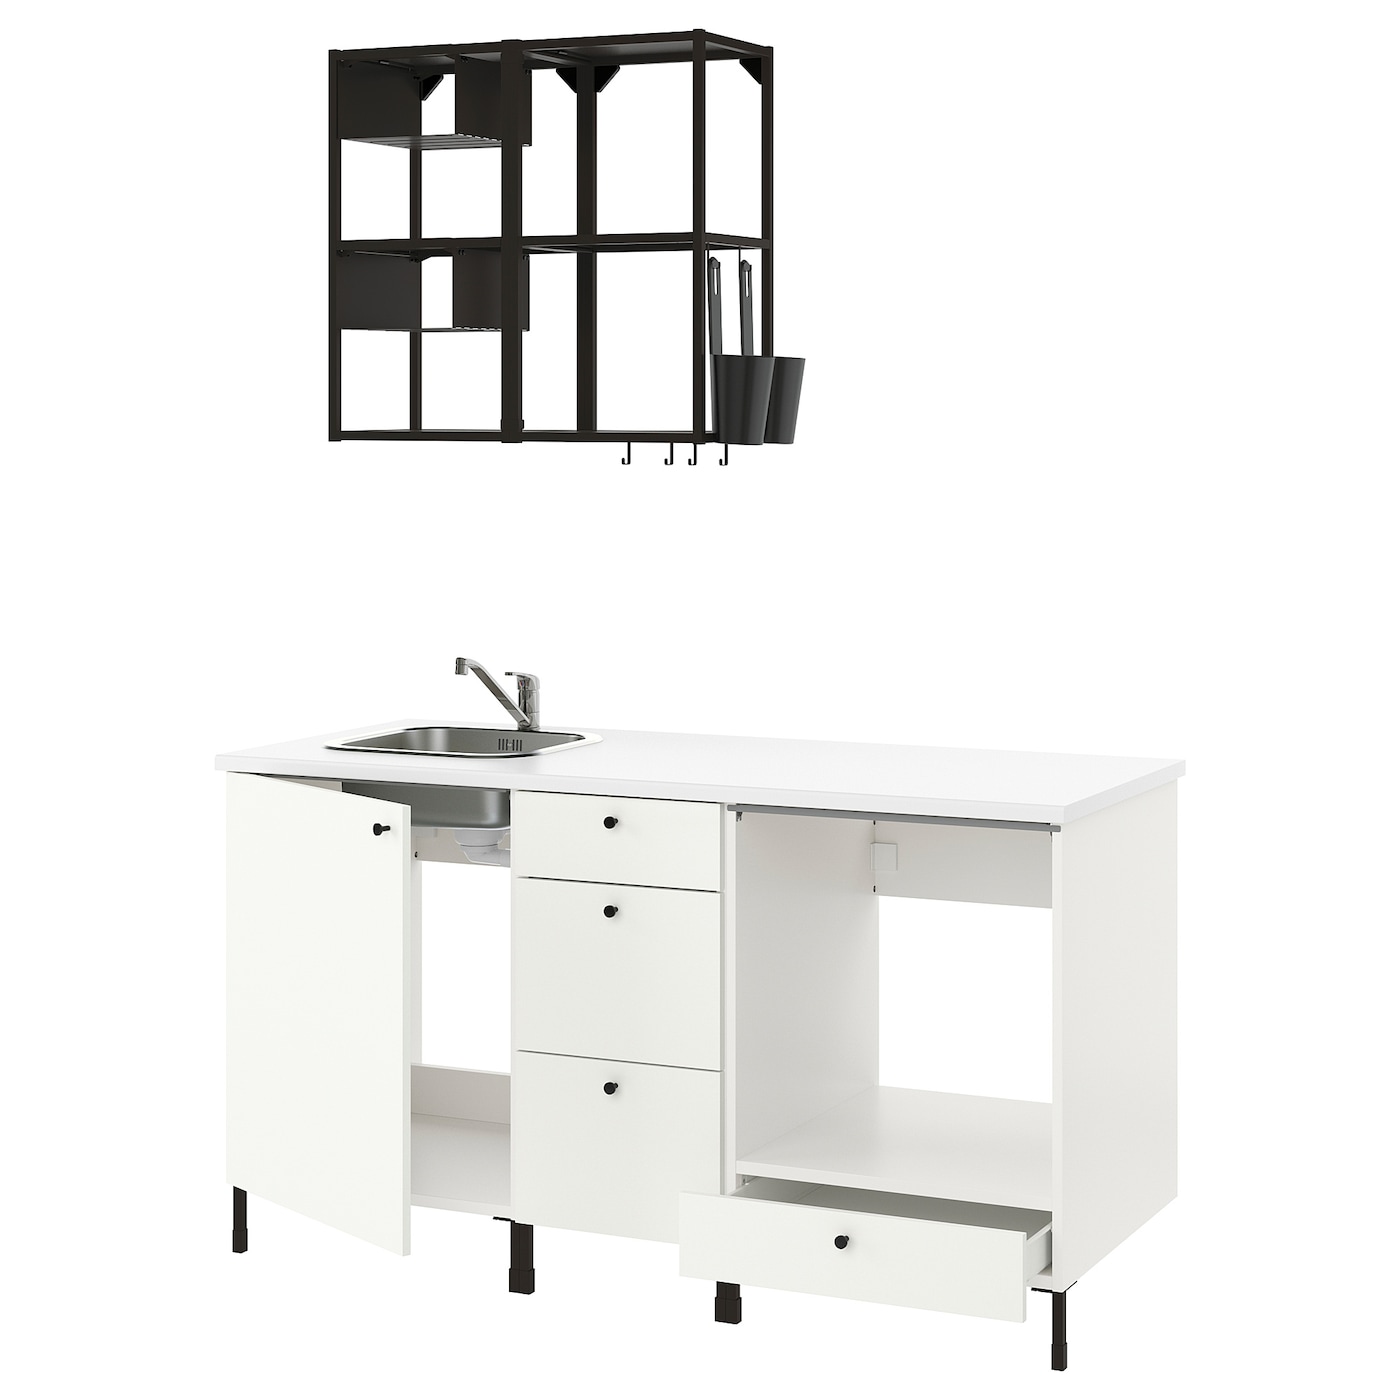 Кухня -  ENHET  IKEA/ ЭНХЕТ ИКЕА, 222х163 см, белый/черный